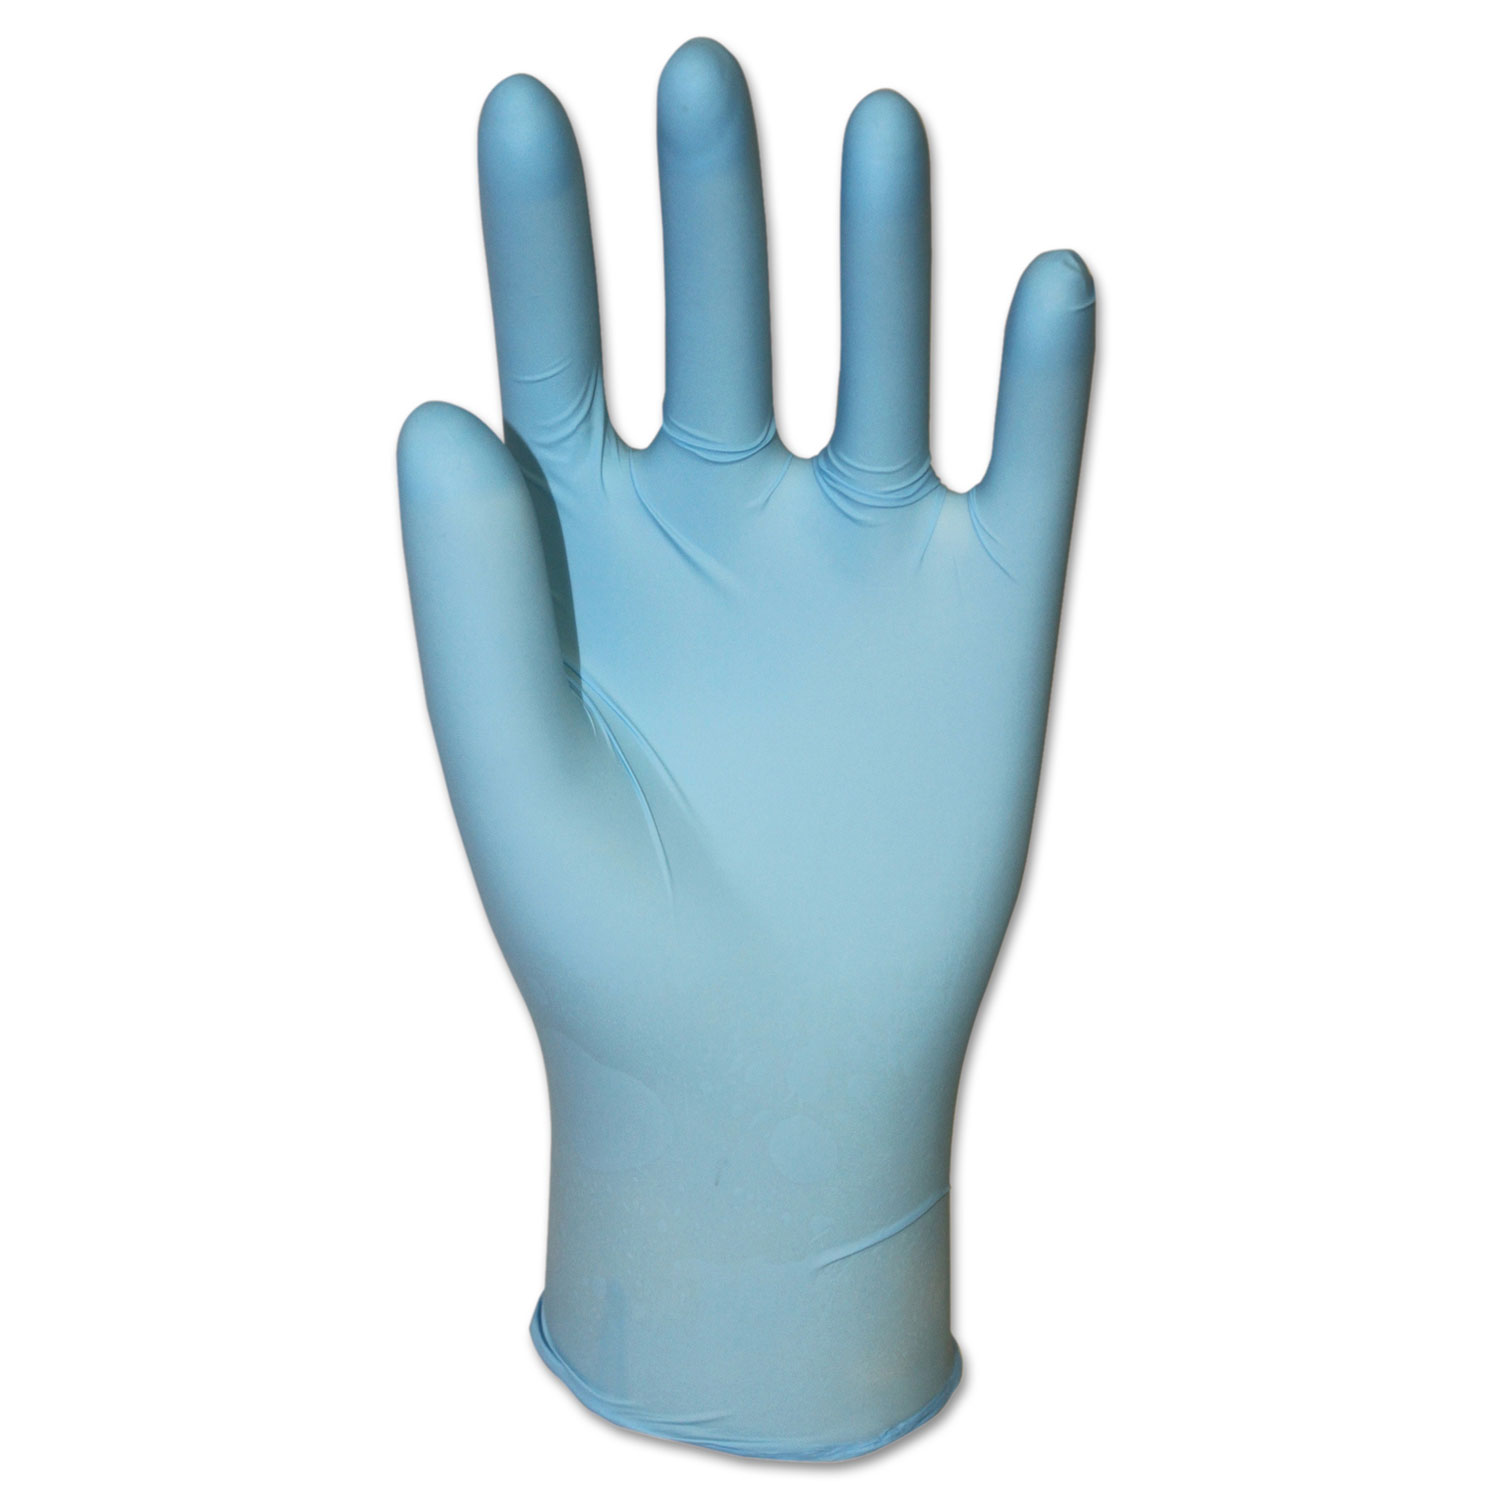 DiversaMed Disposable Powder-Free Exam Nitrile Gloves, Blue, X-Large, 100/Box, 10 Boxes/Carton